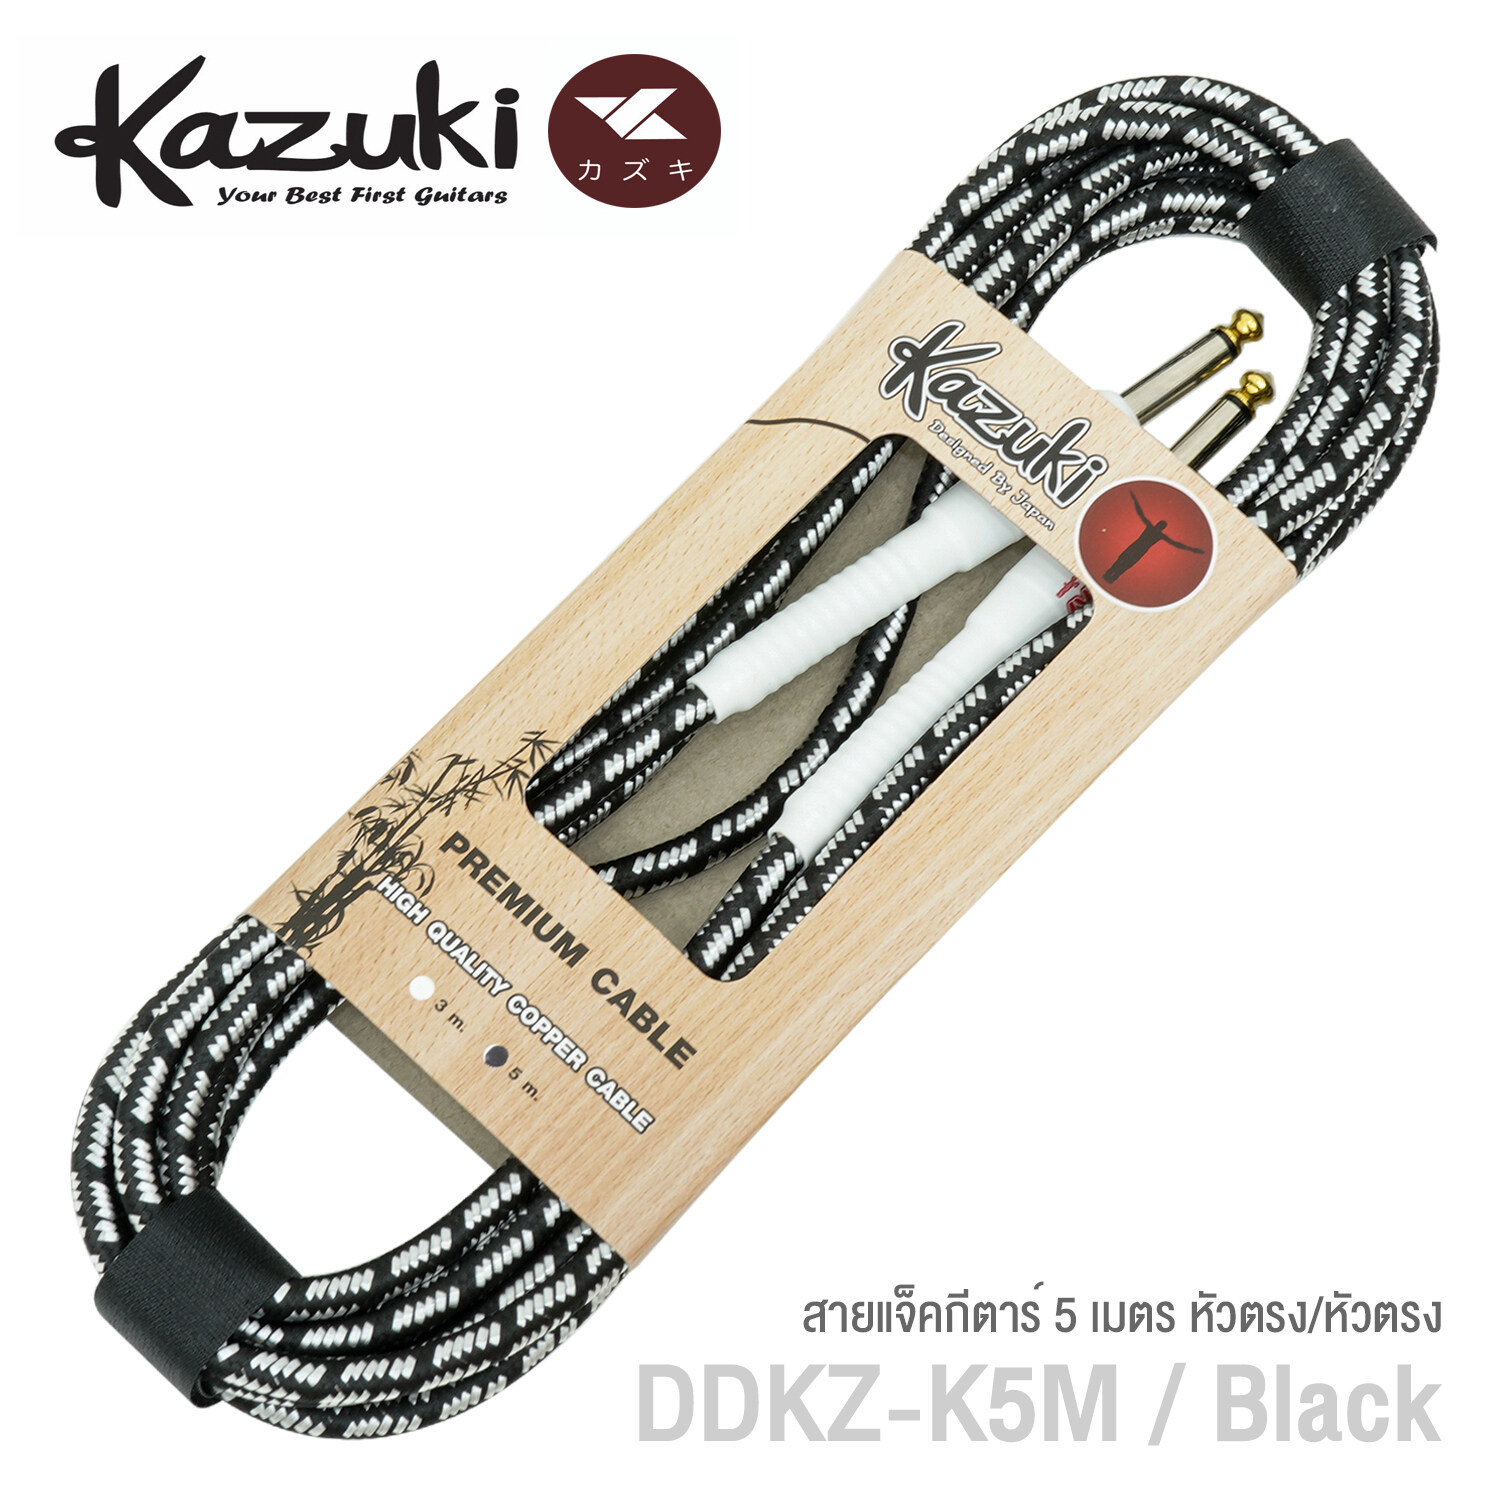 Kazuki DDKZ-K5M Black